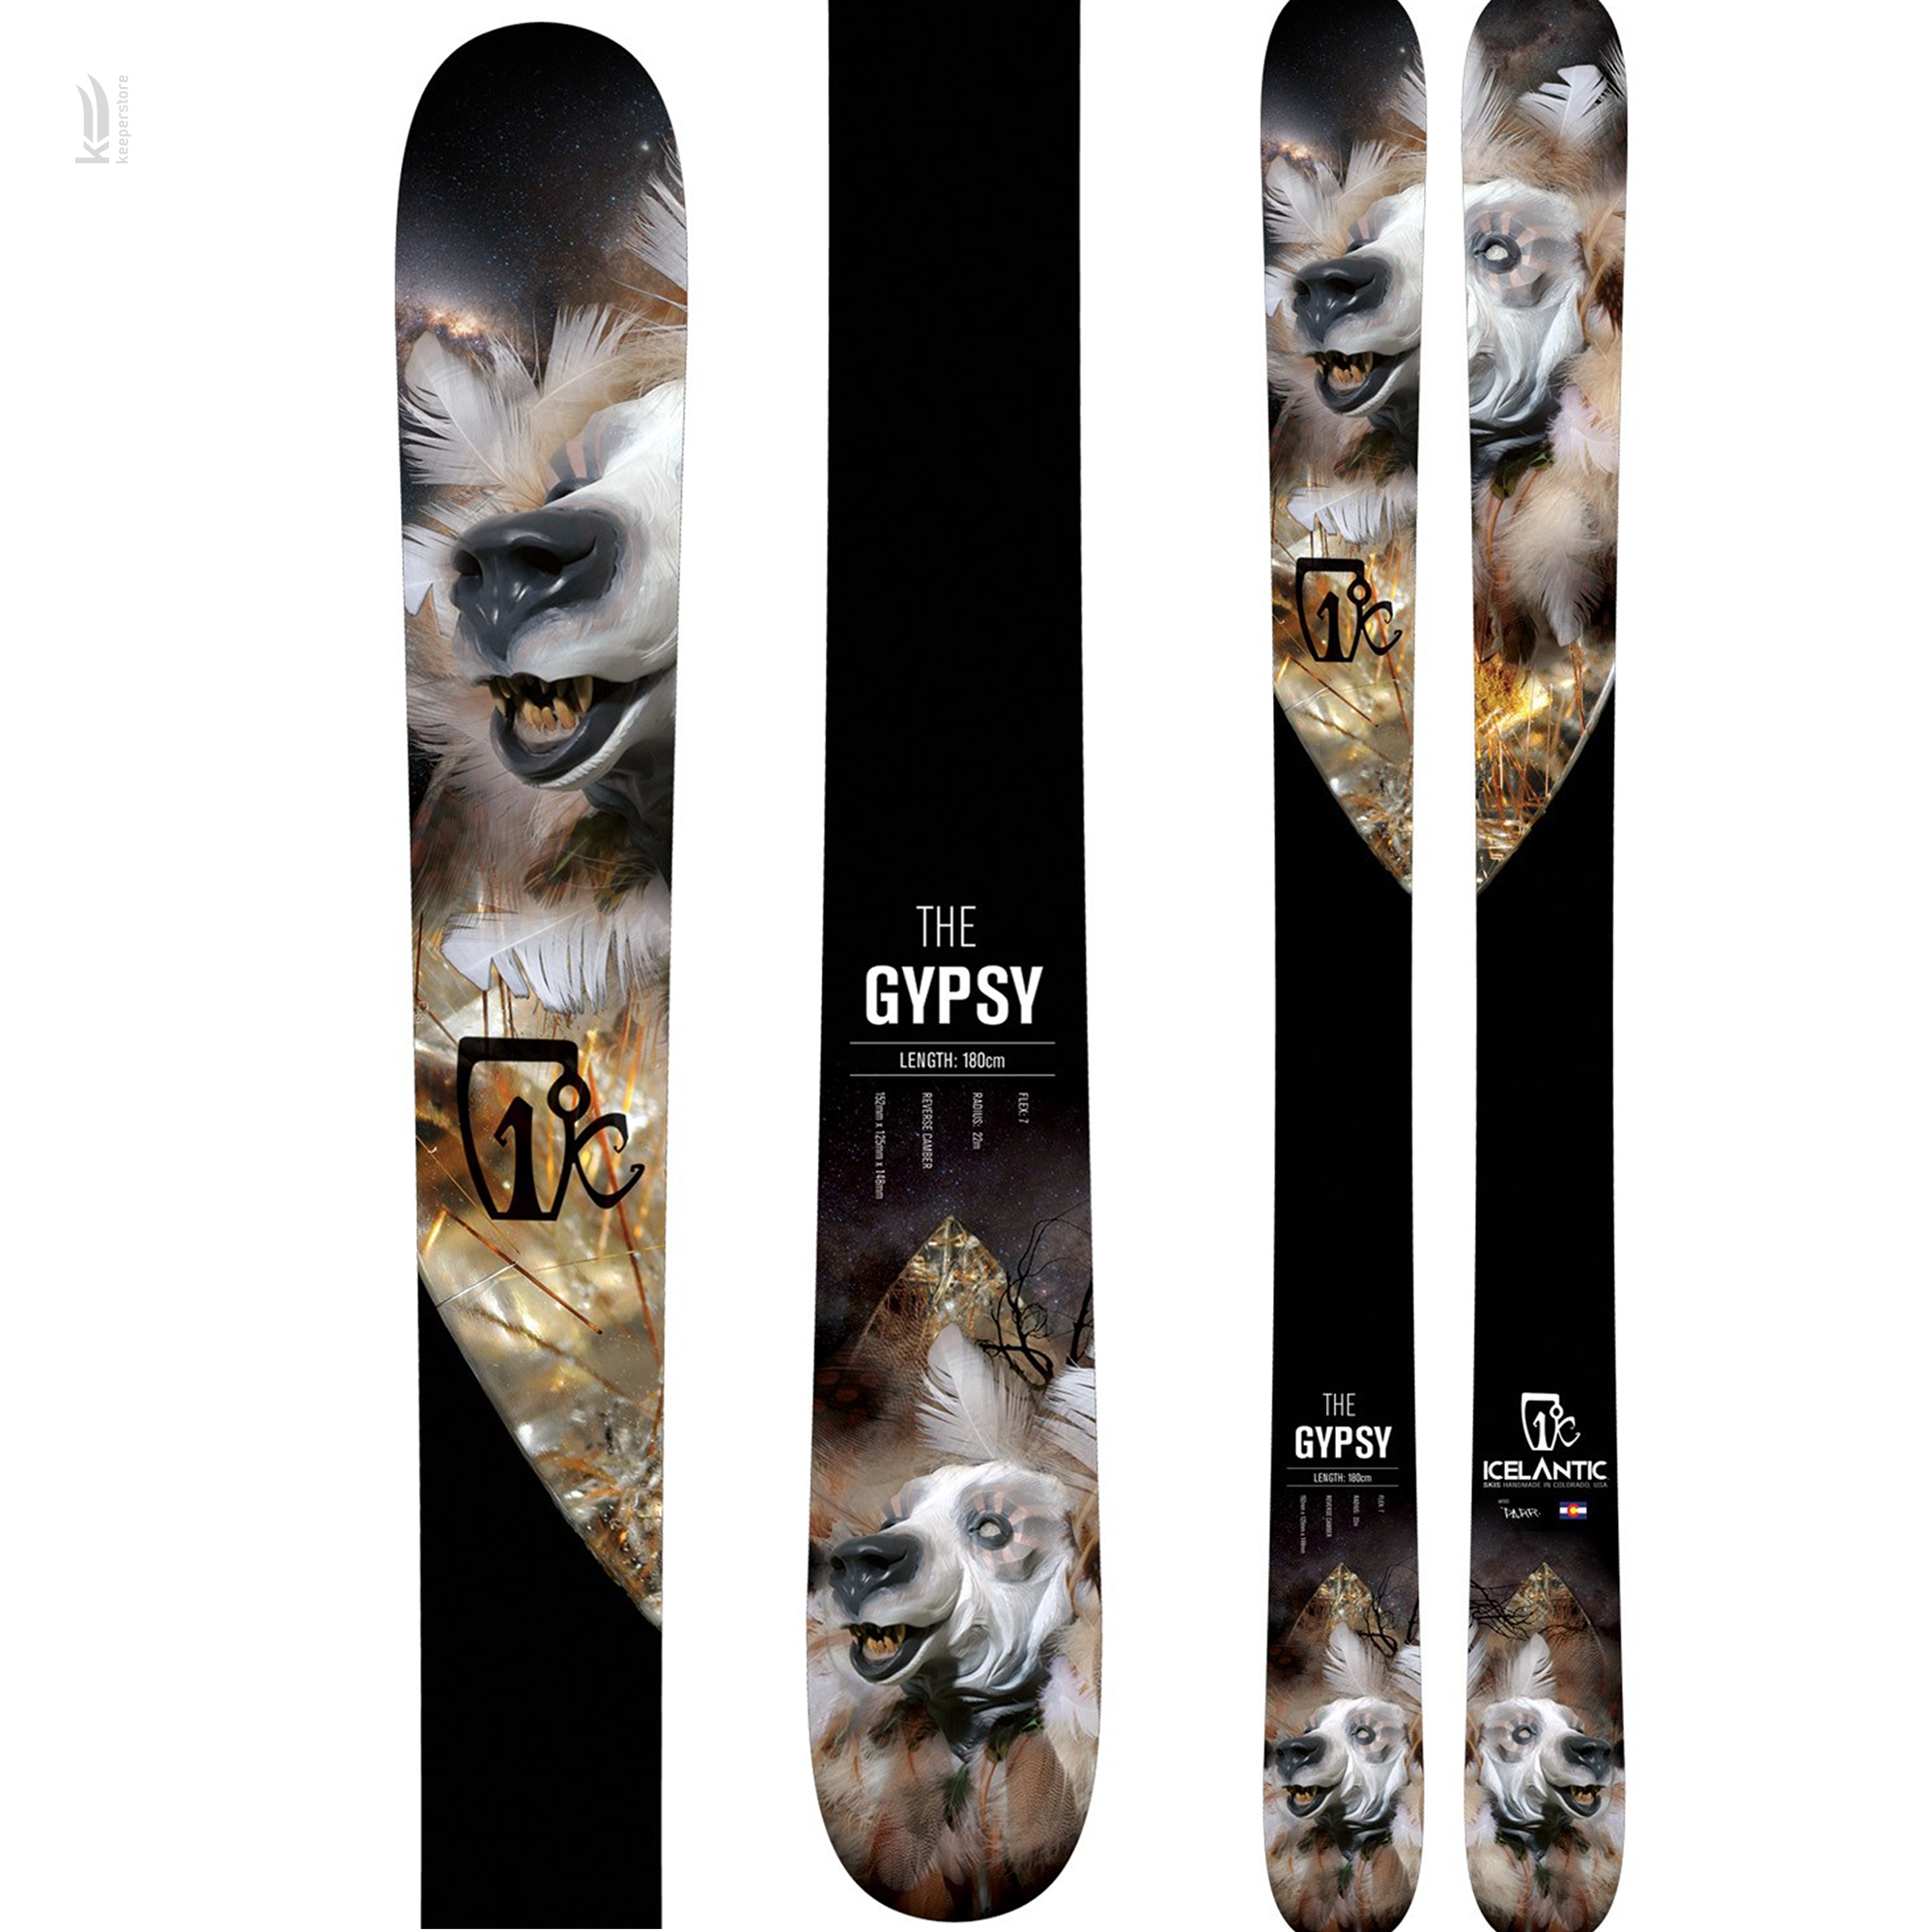 Лыжи для фрирайда Icelantic Gypsy 2014/2015 180cm